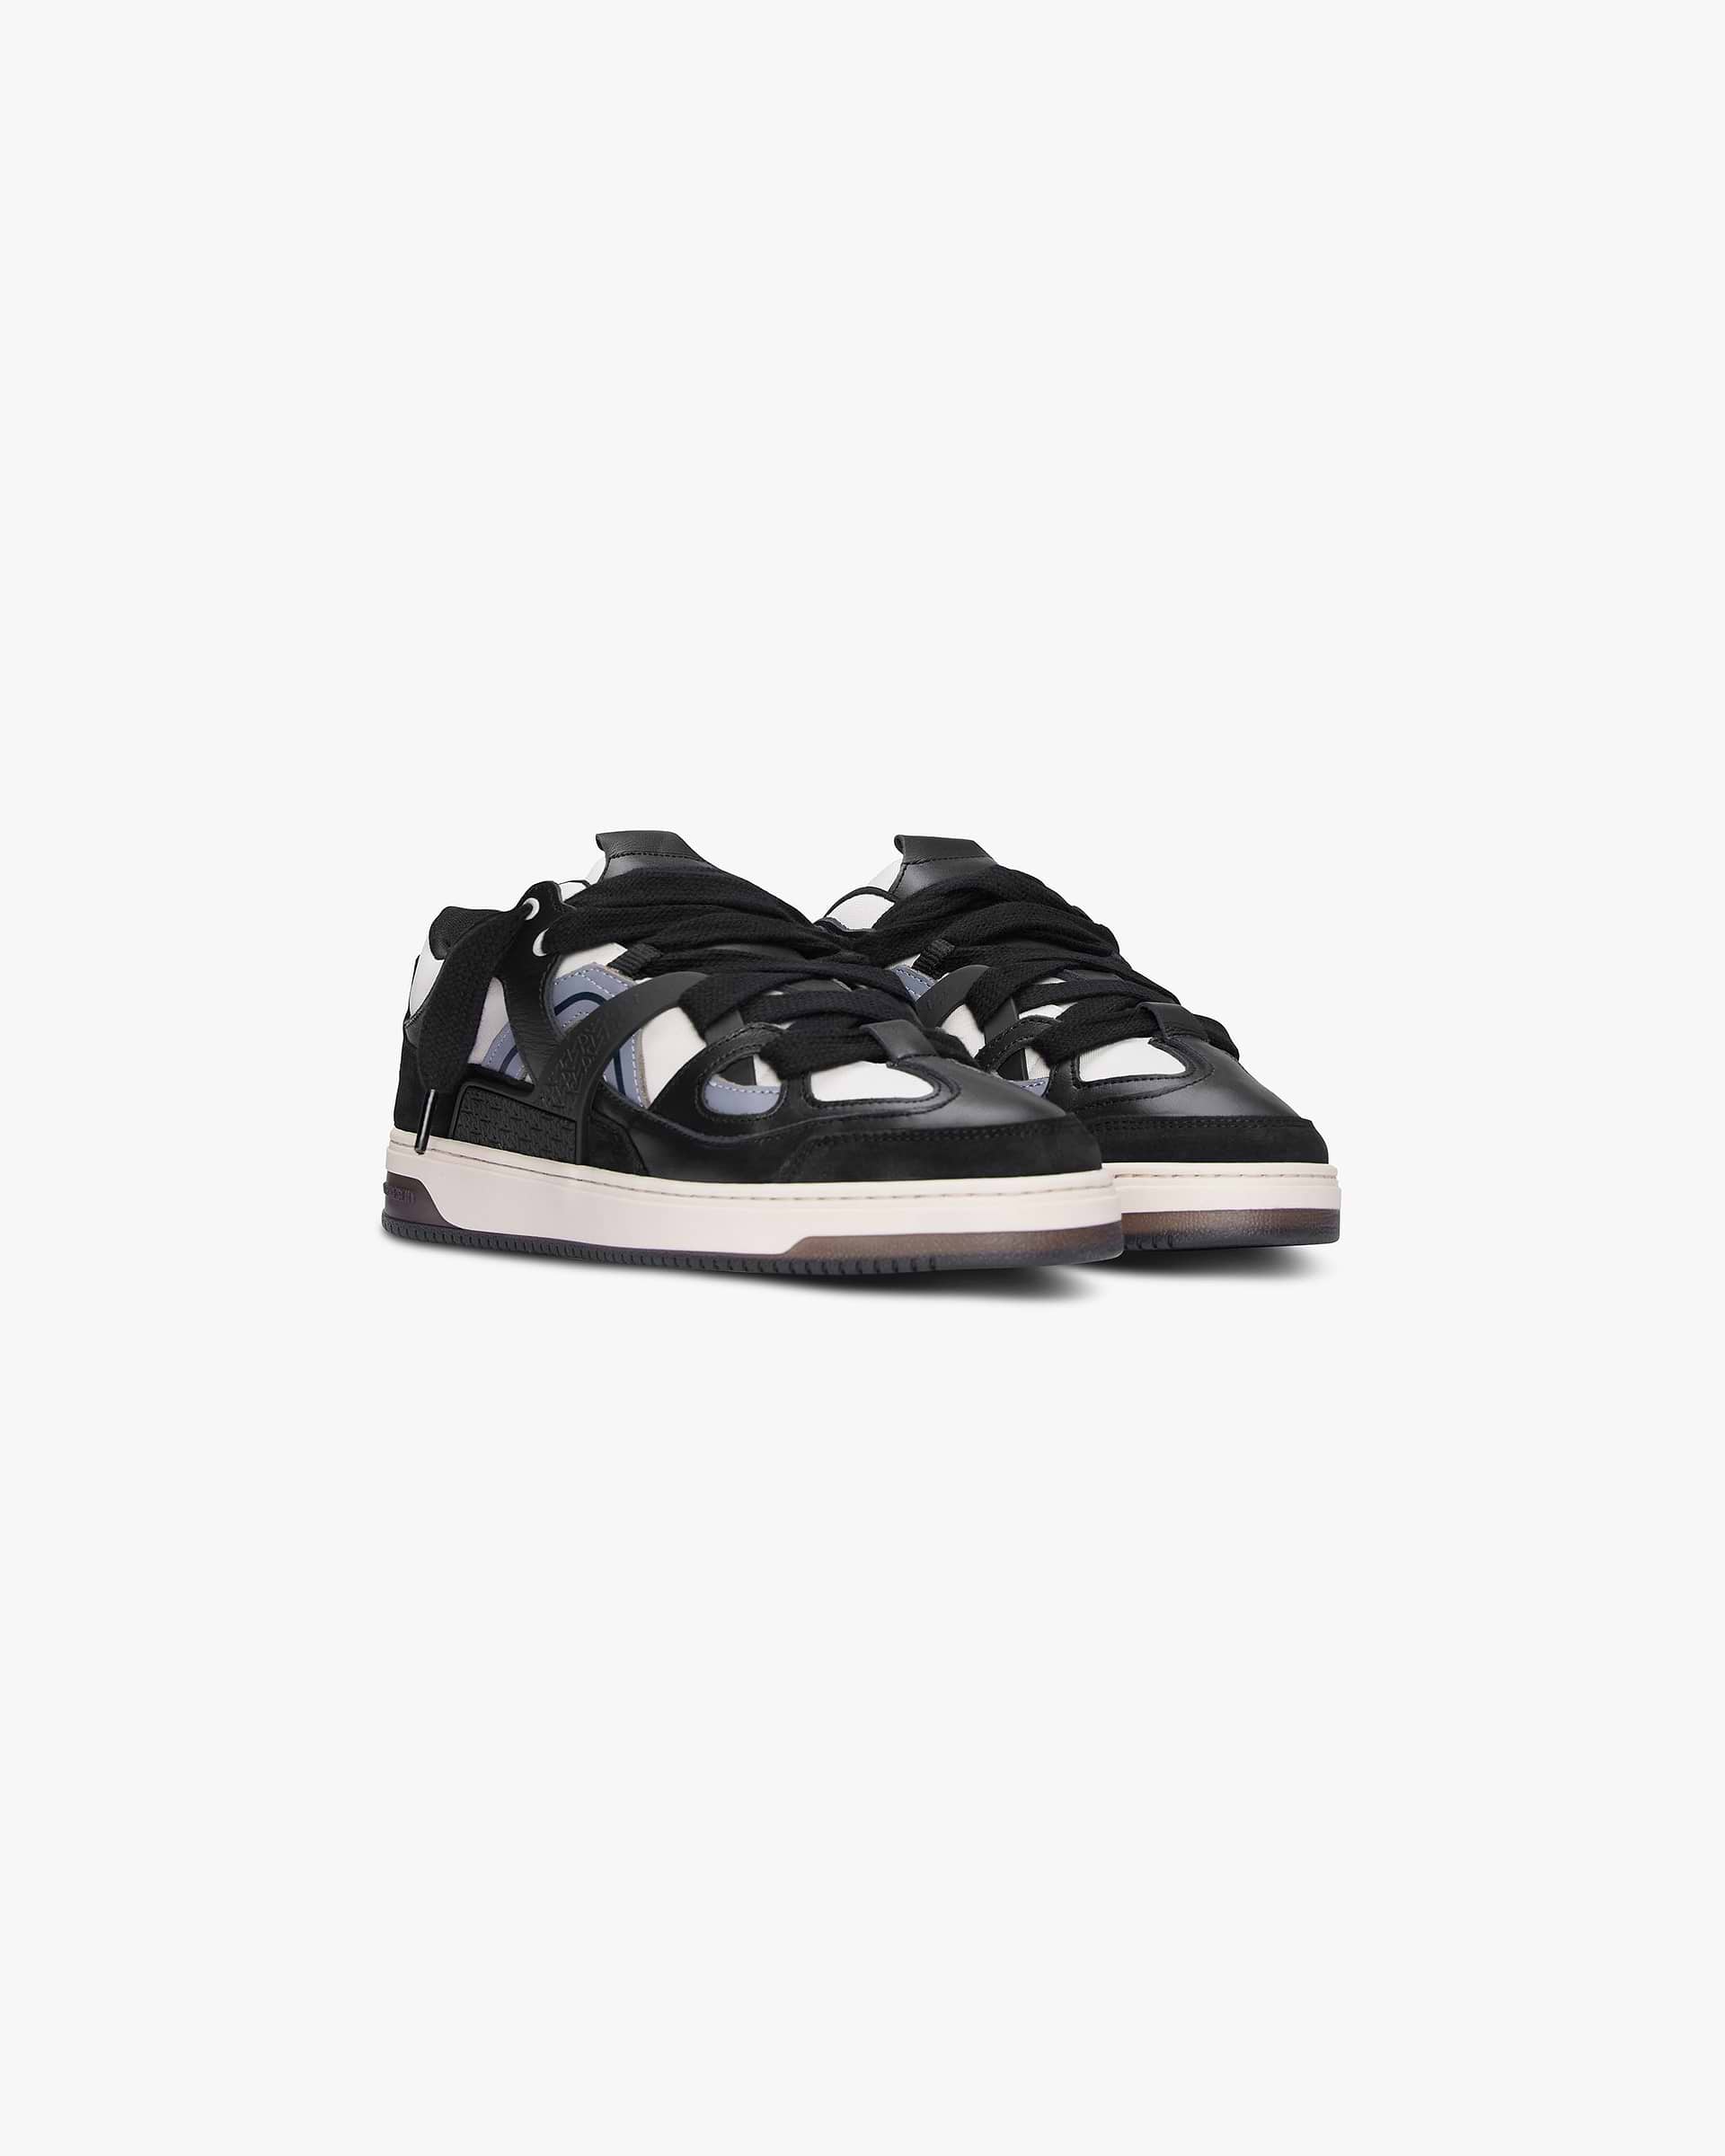 Bully Sneaker | Black White Footwear FW23 | Represent Clo